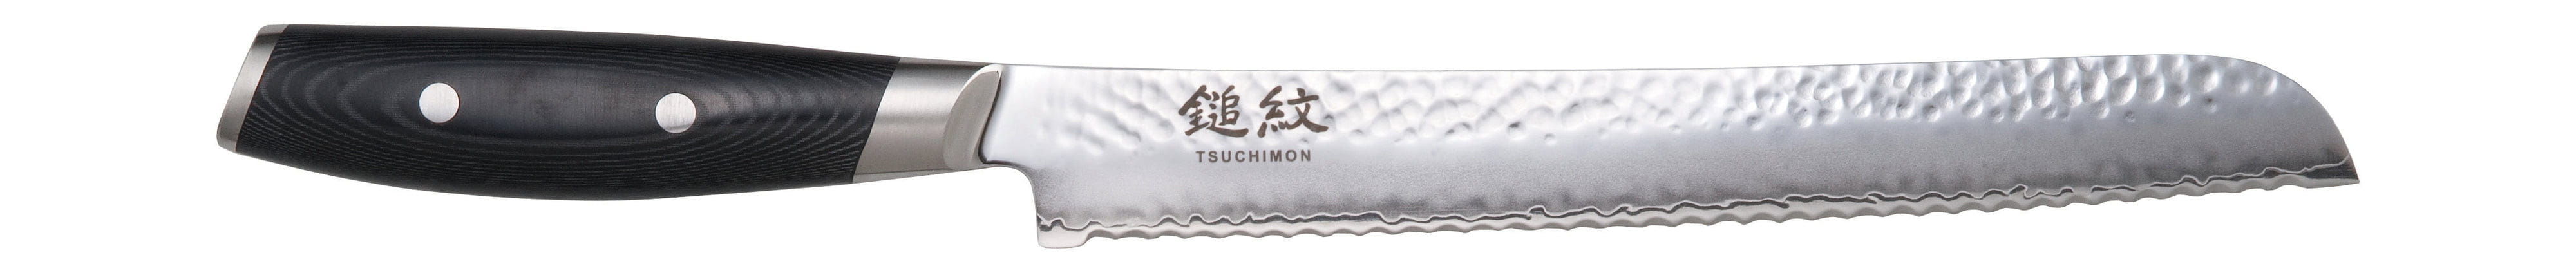 Yaxell tsuchimon chlebový nůž, 23 cm